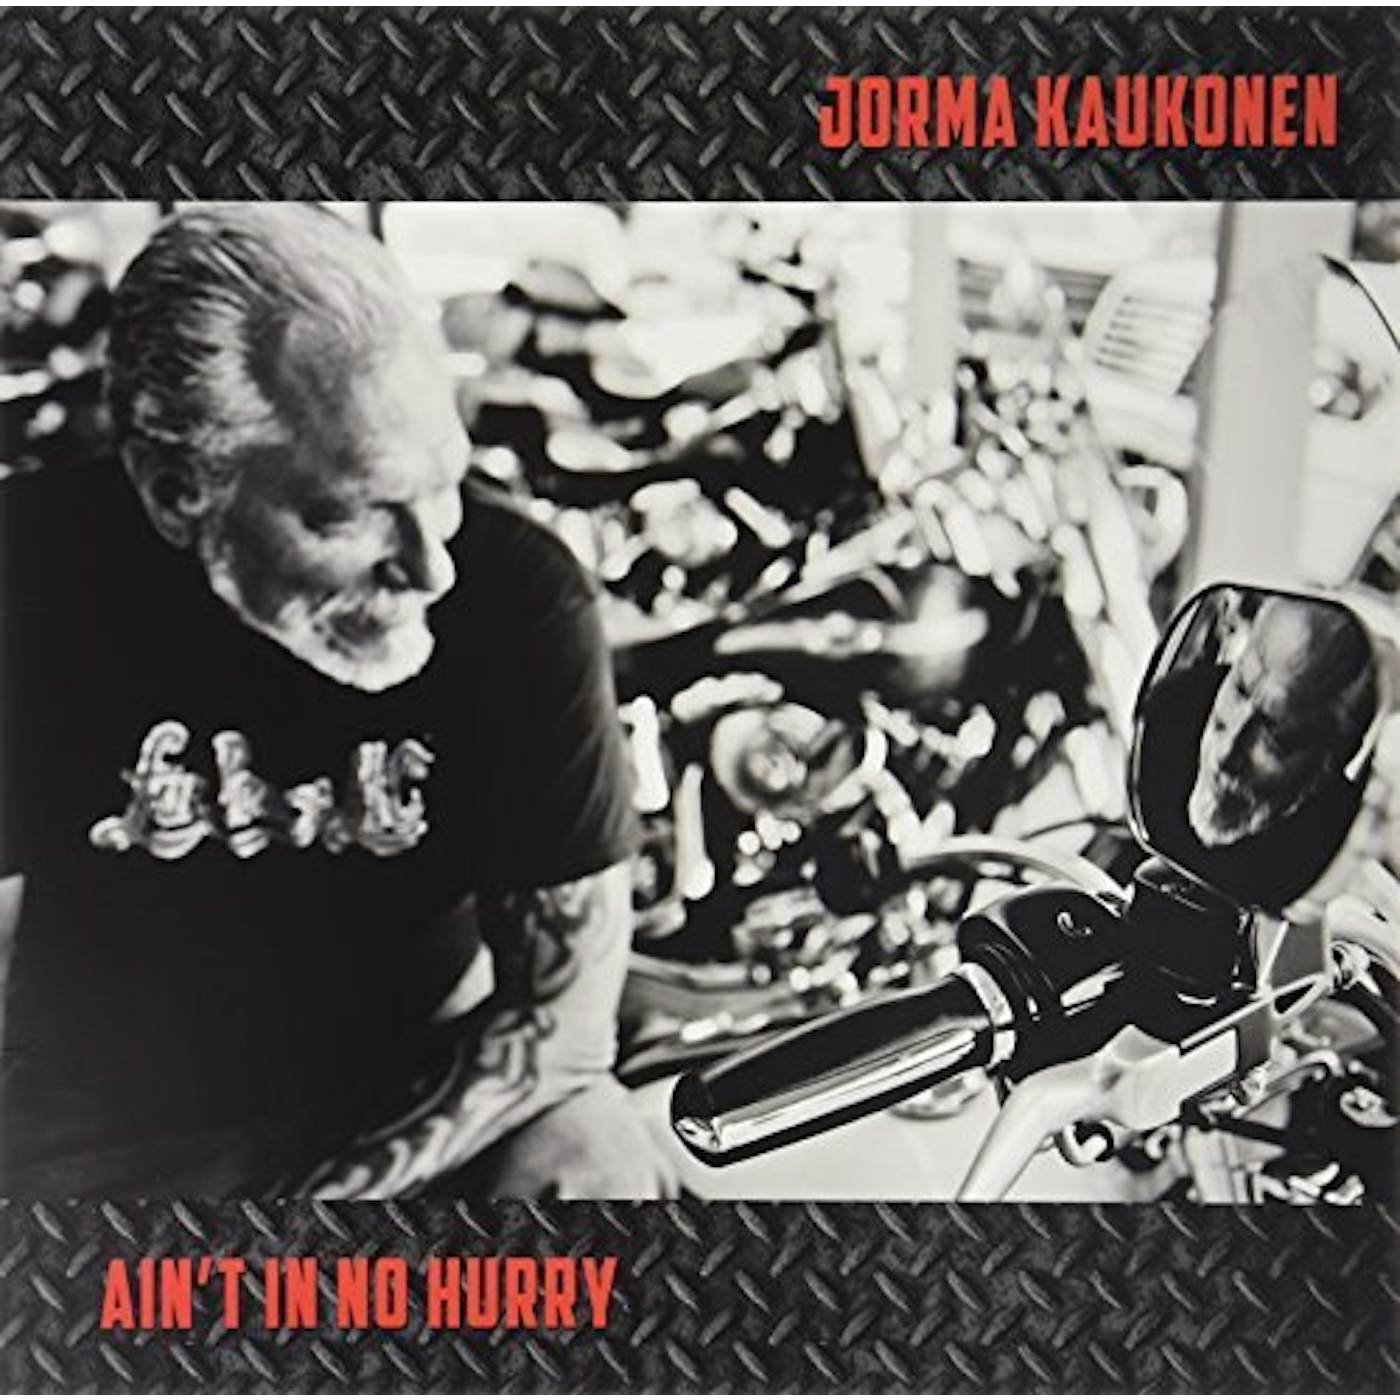 Jorma Kaukonen Ain't In No Hurry Vinyl Record